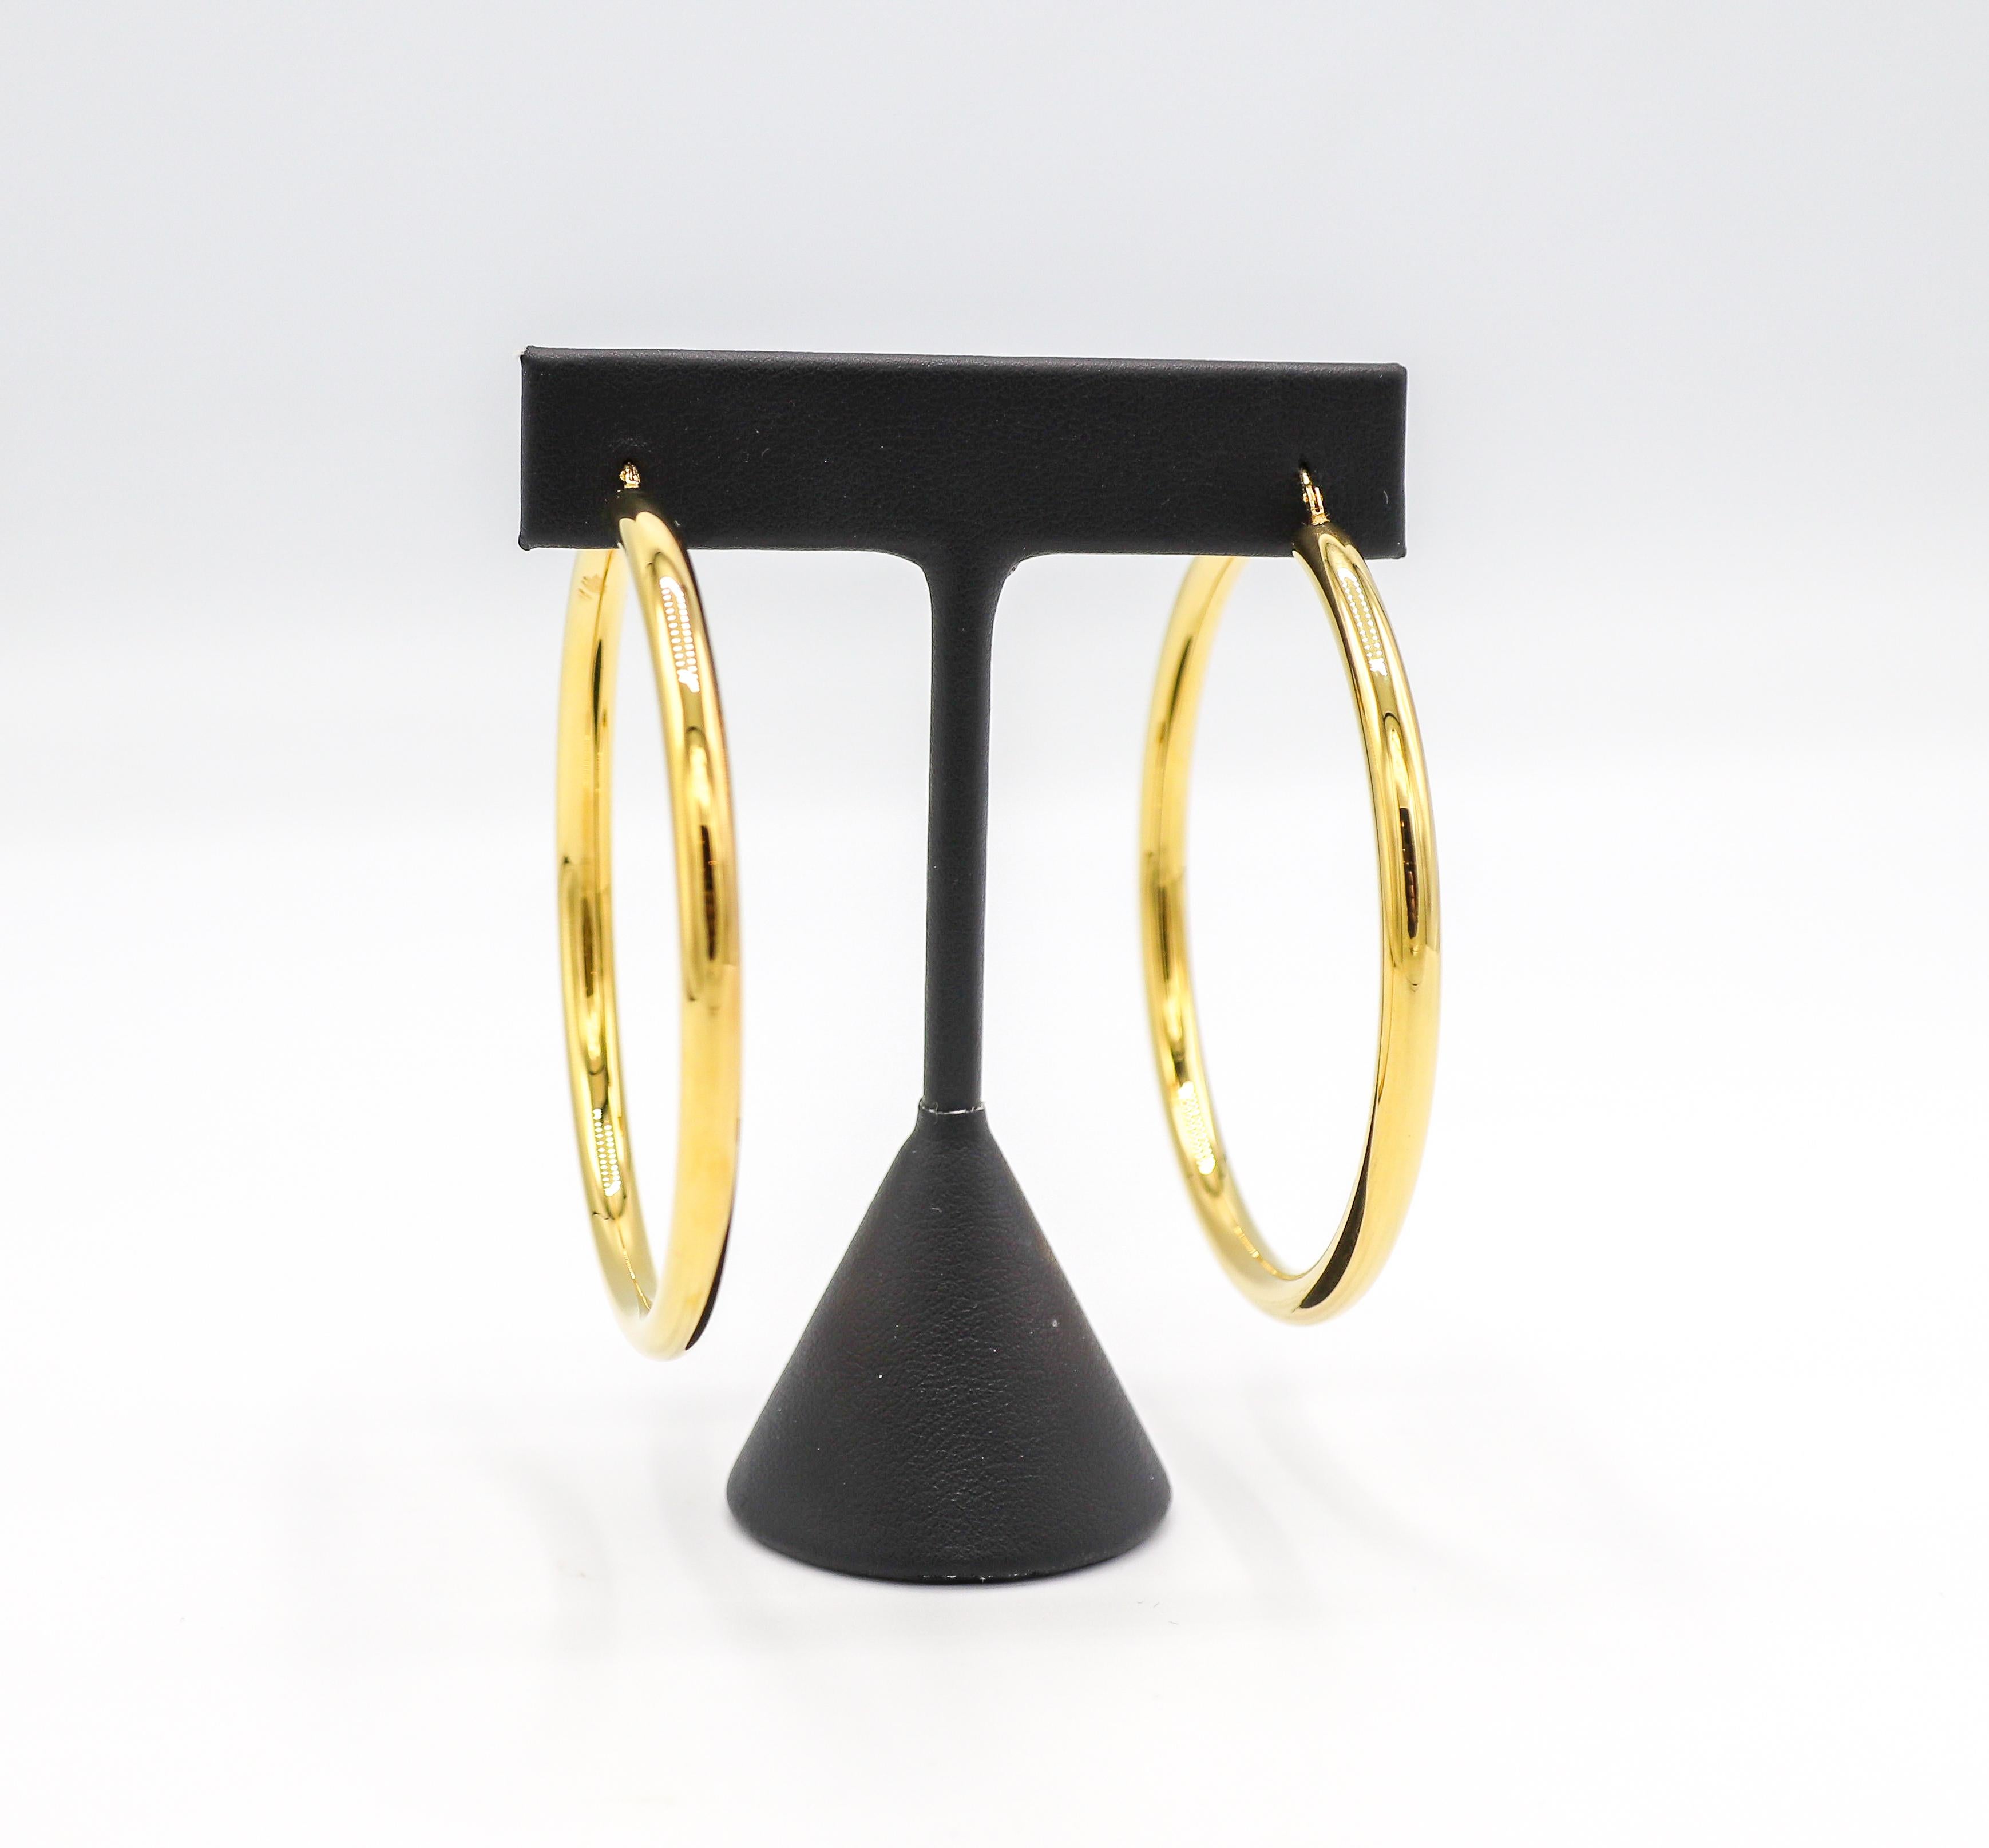 14 Karat Yellow Gold Large Hoop Earrings 
Metal: 14k yellow gold
Weight: 16.35 grams
Diameter: 57mm
Width: 4.2mm
